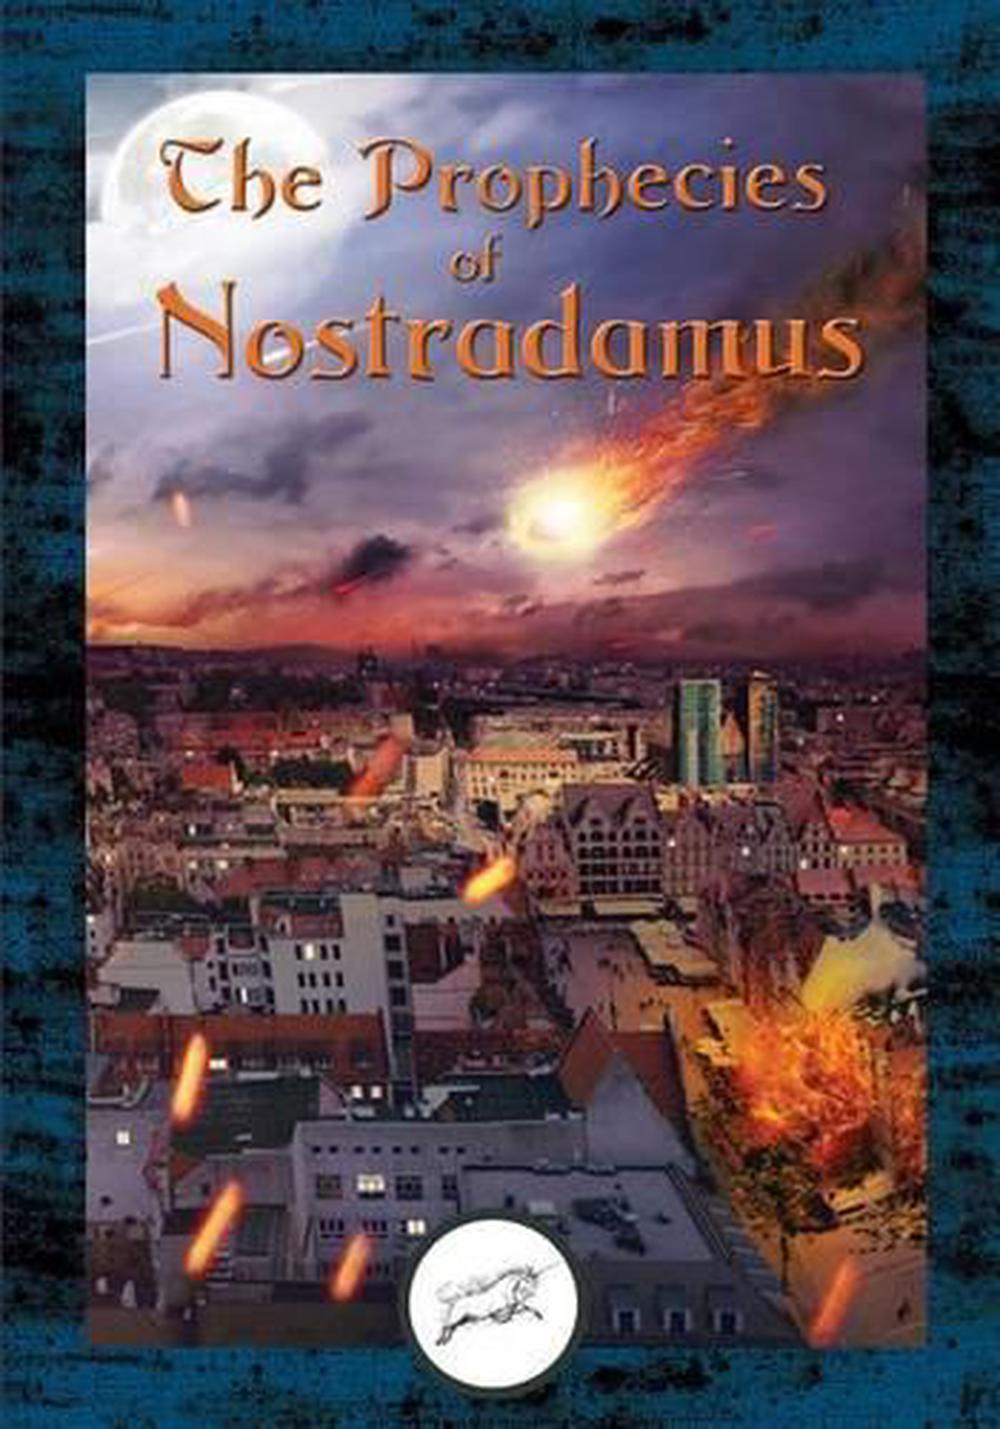 The Prophecies of Nostradamus by Michel Nostradamus (English) Paperback